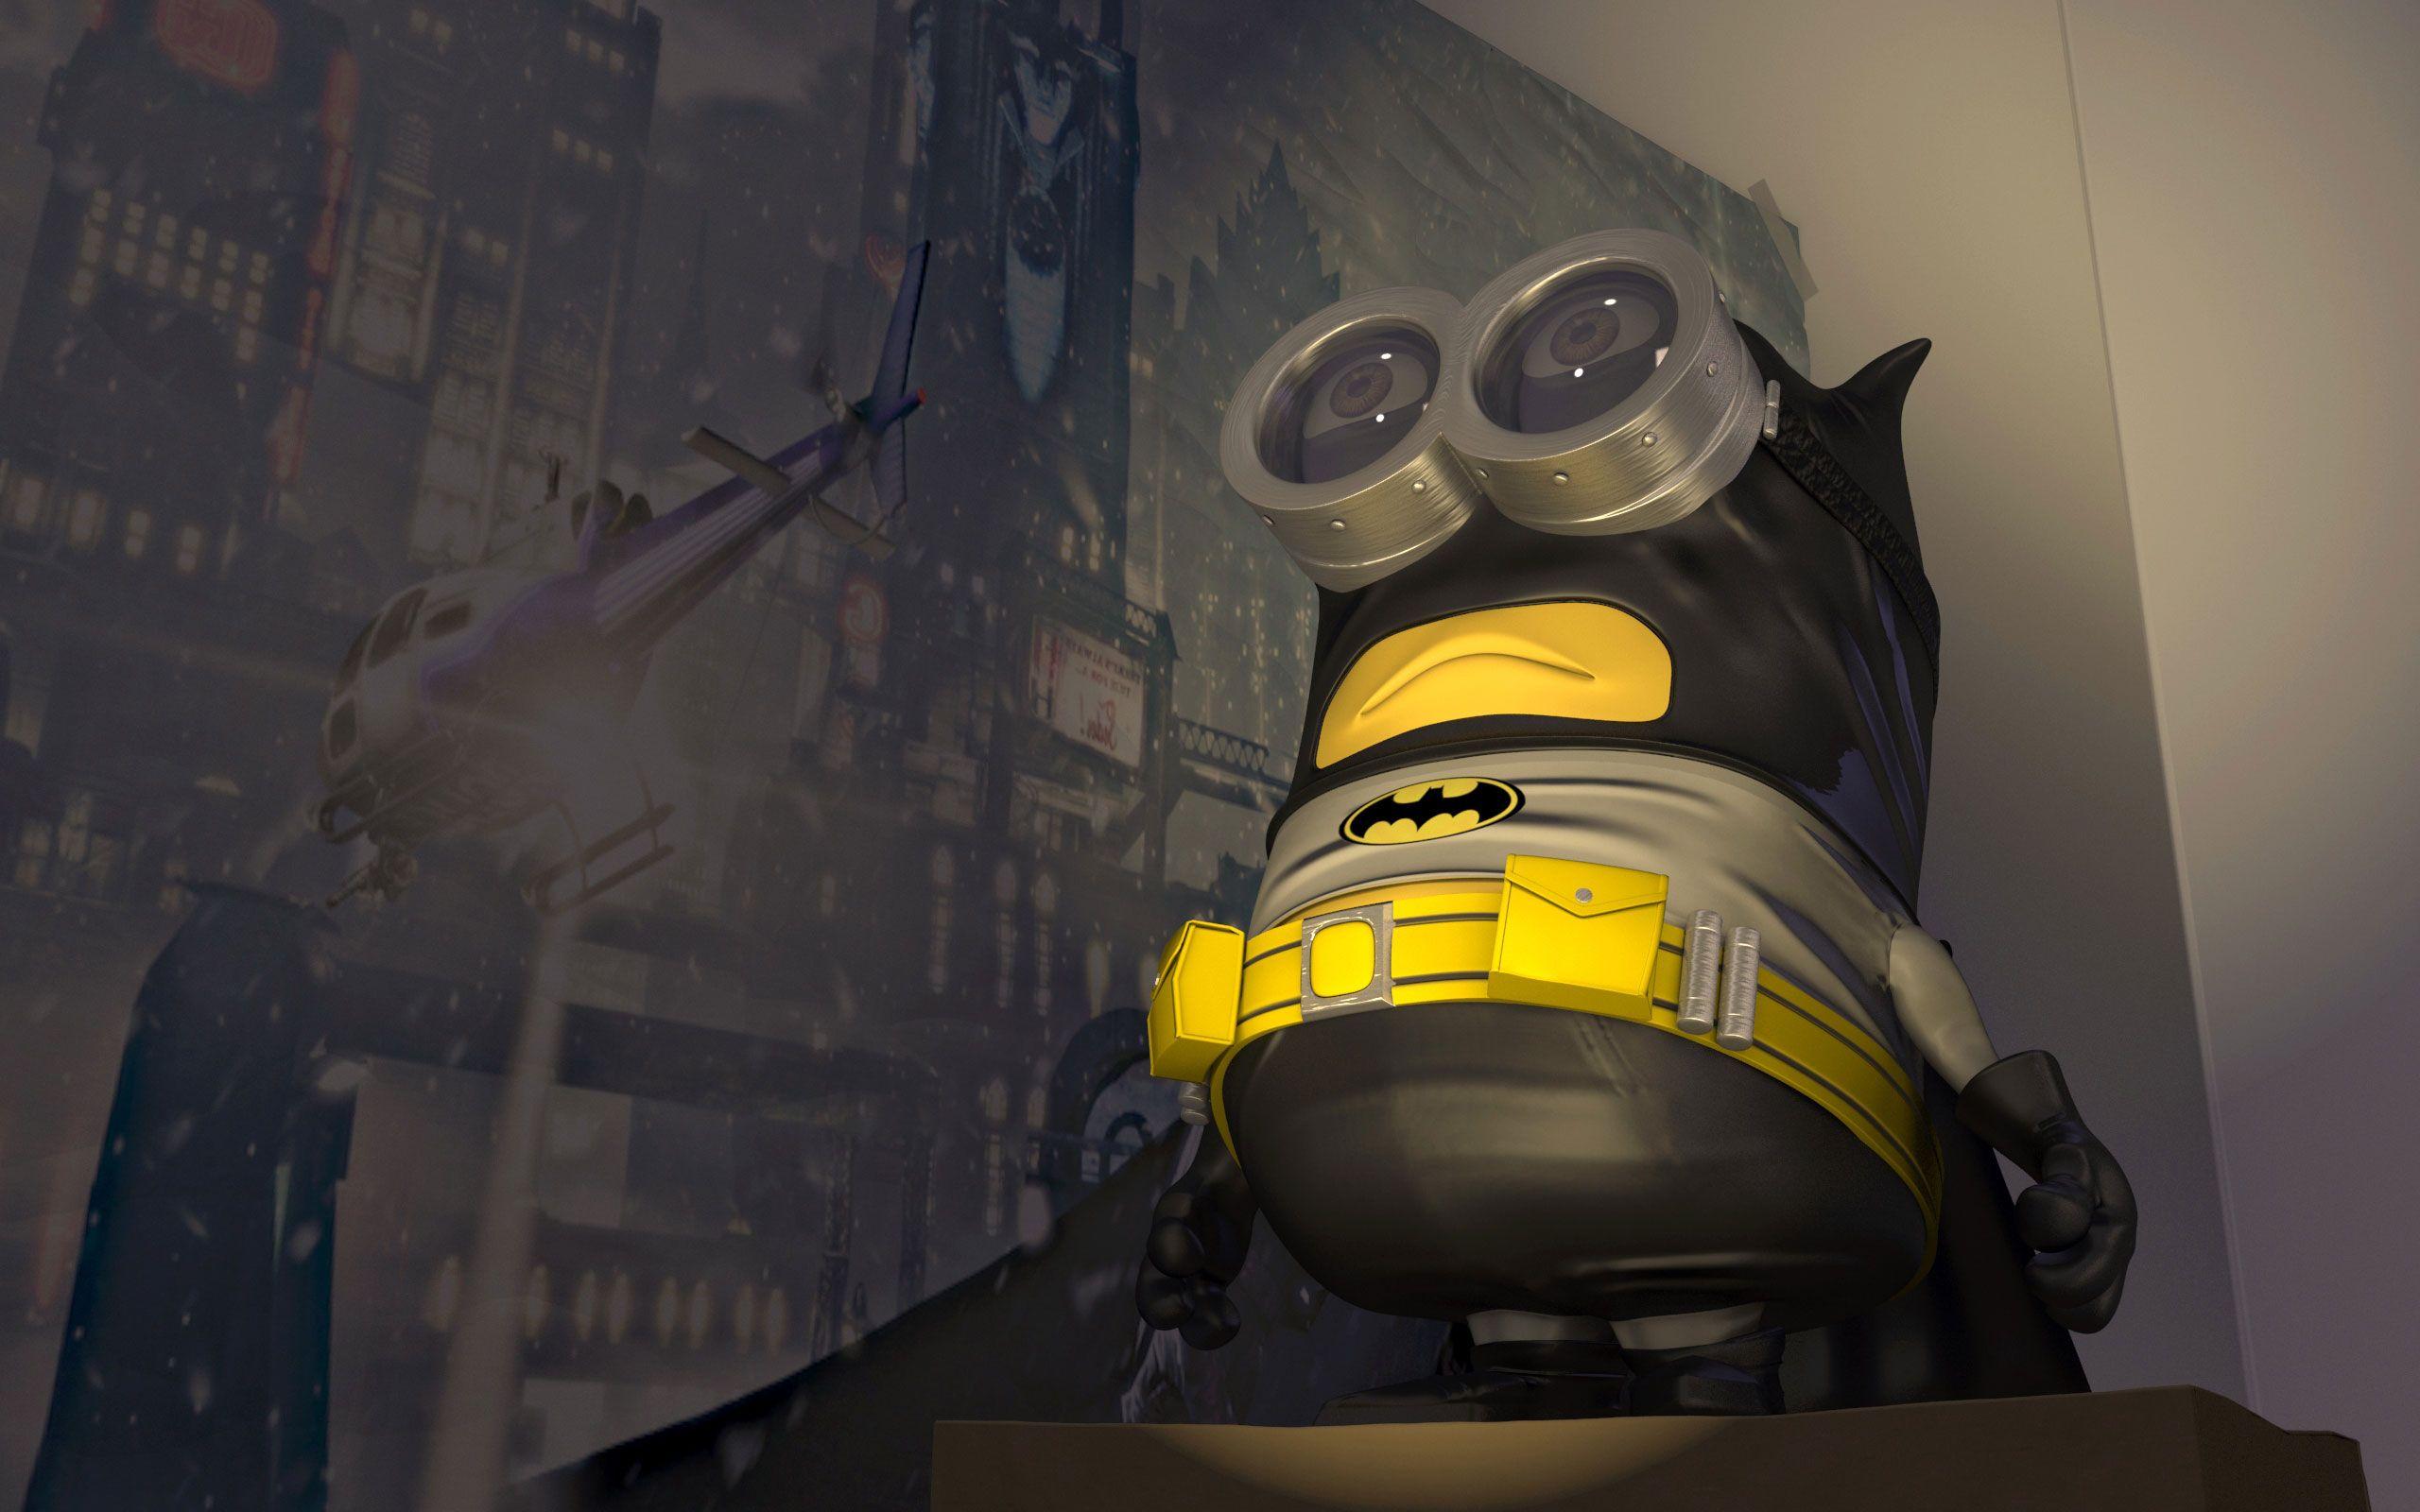 Download wallpaper Minion Batman, art, Minions, superheroes